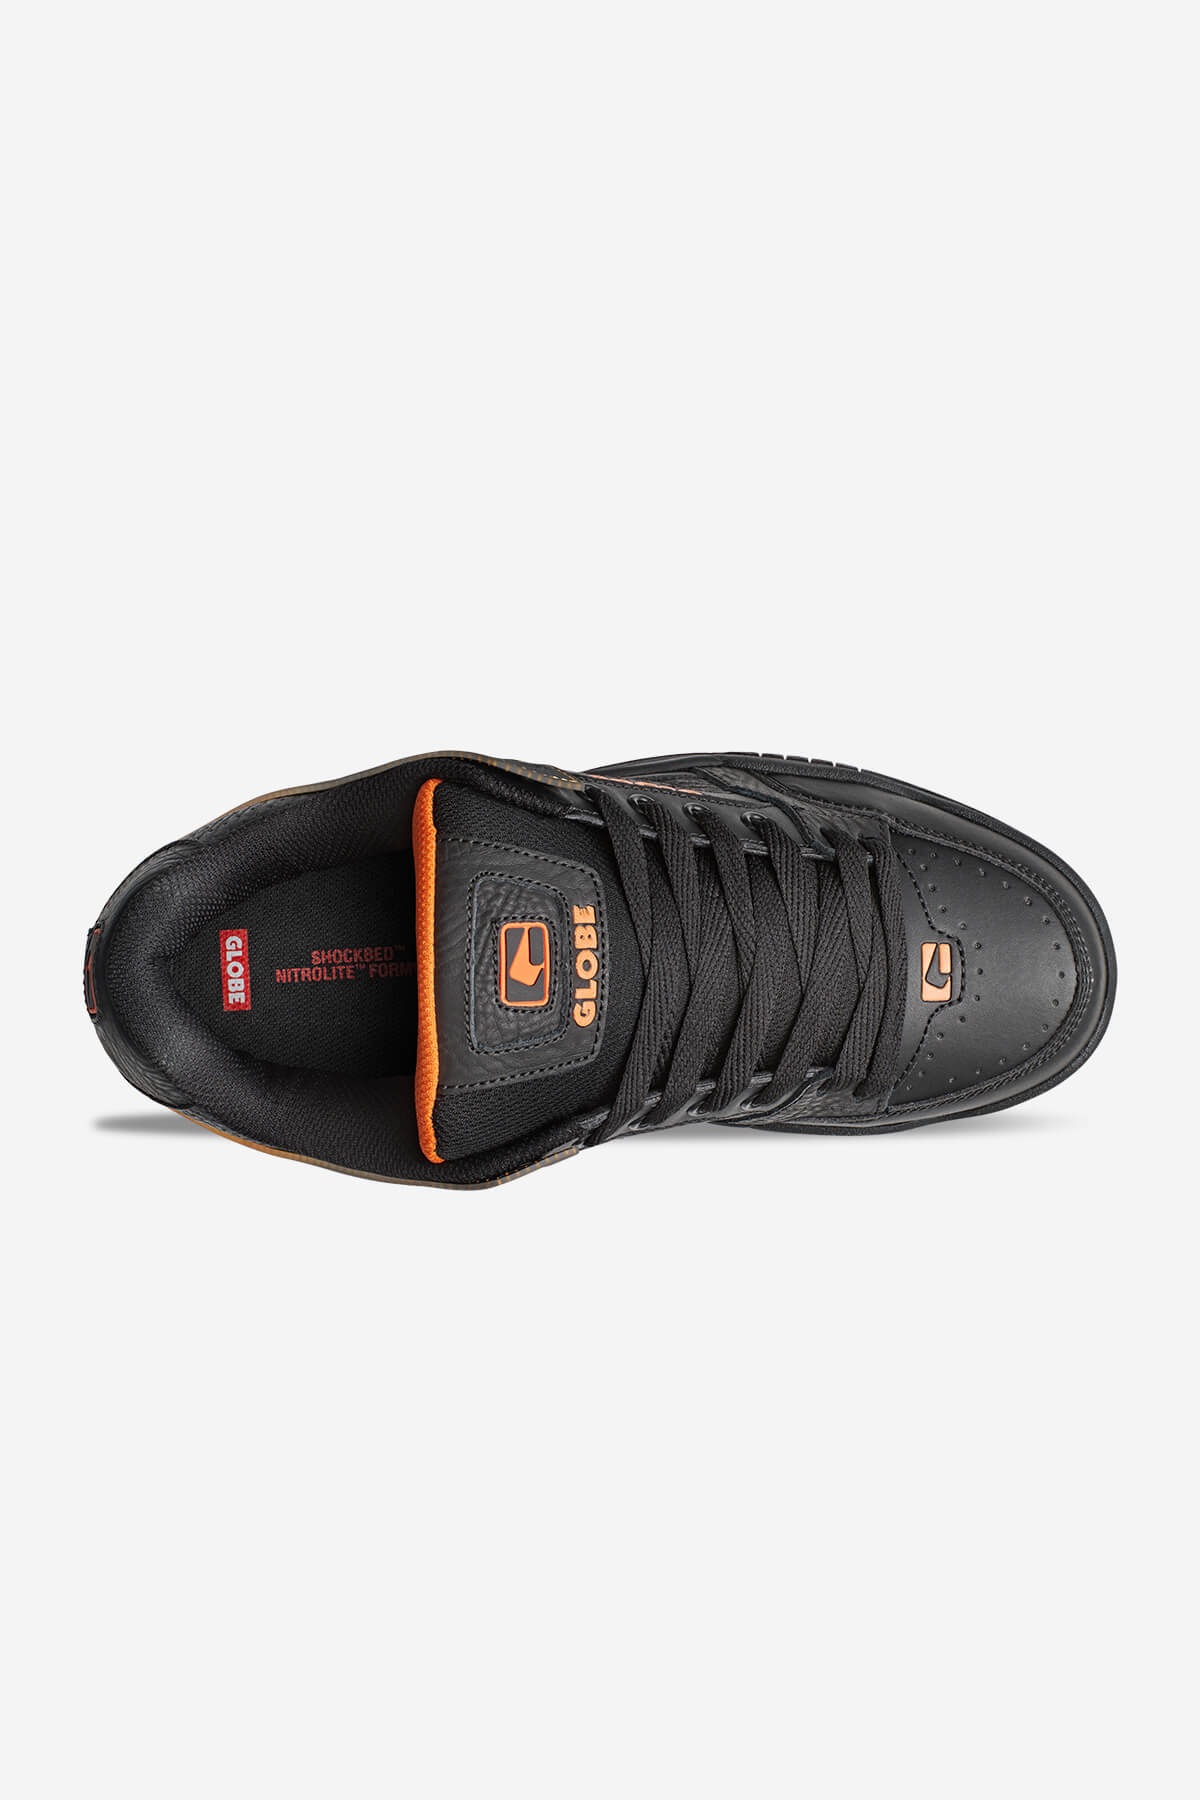 Globe Low shoes Tilt - Black/Orange Fade in Black/Orange Fade